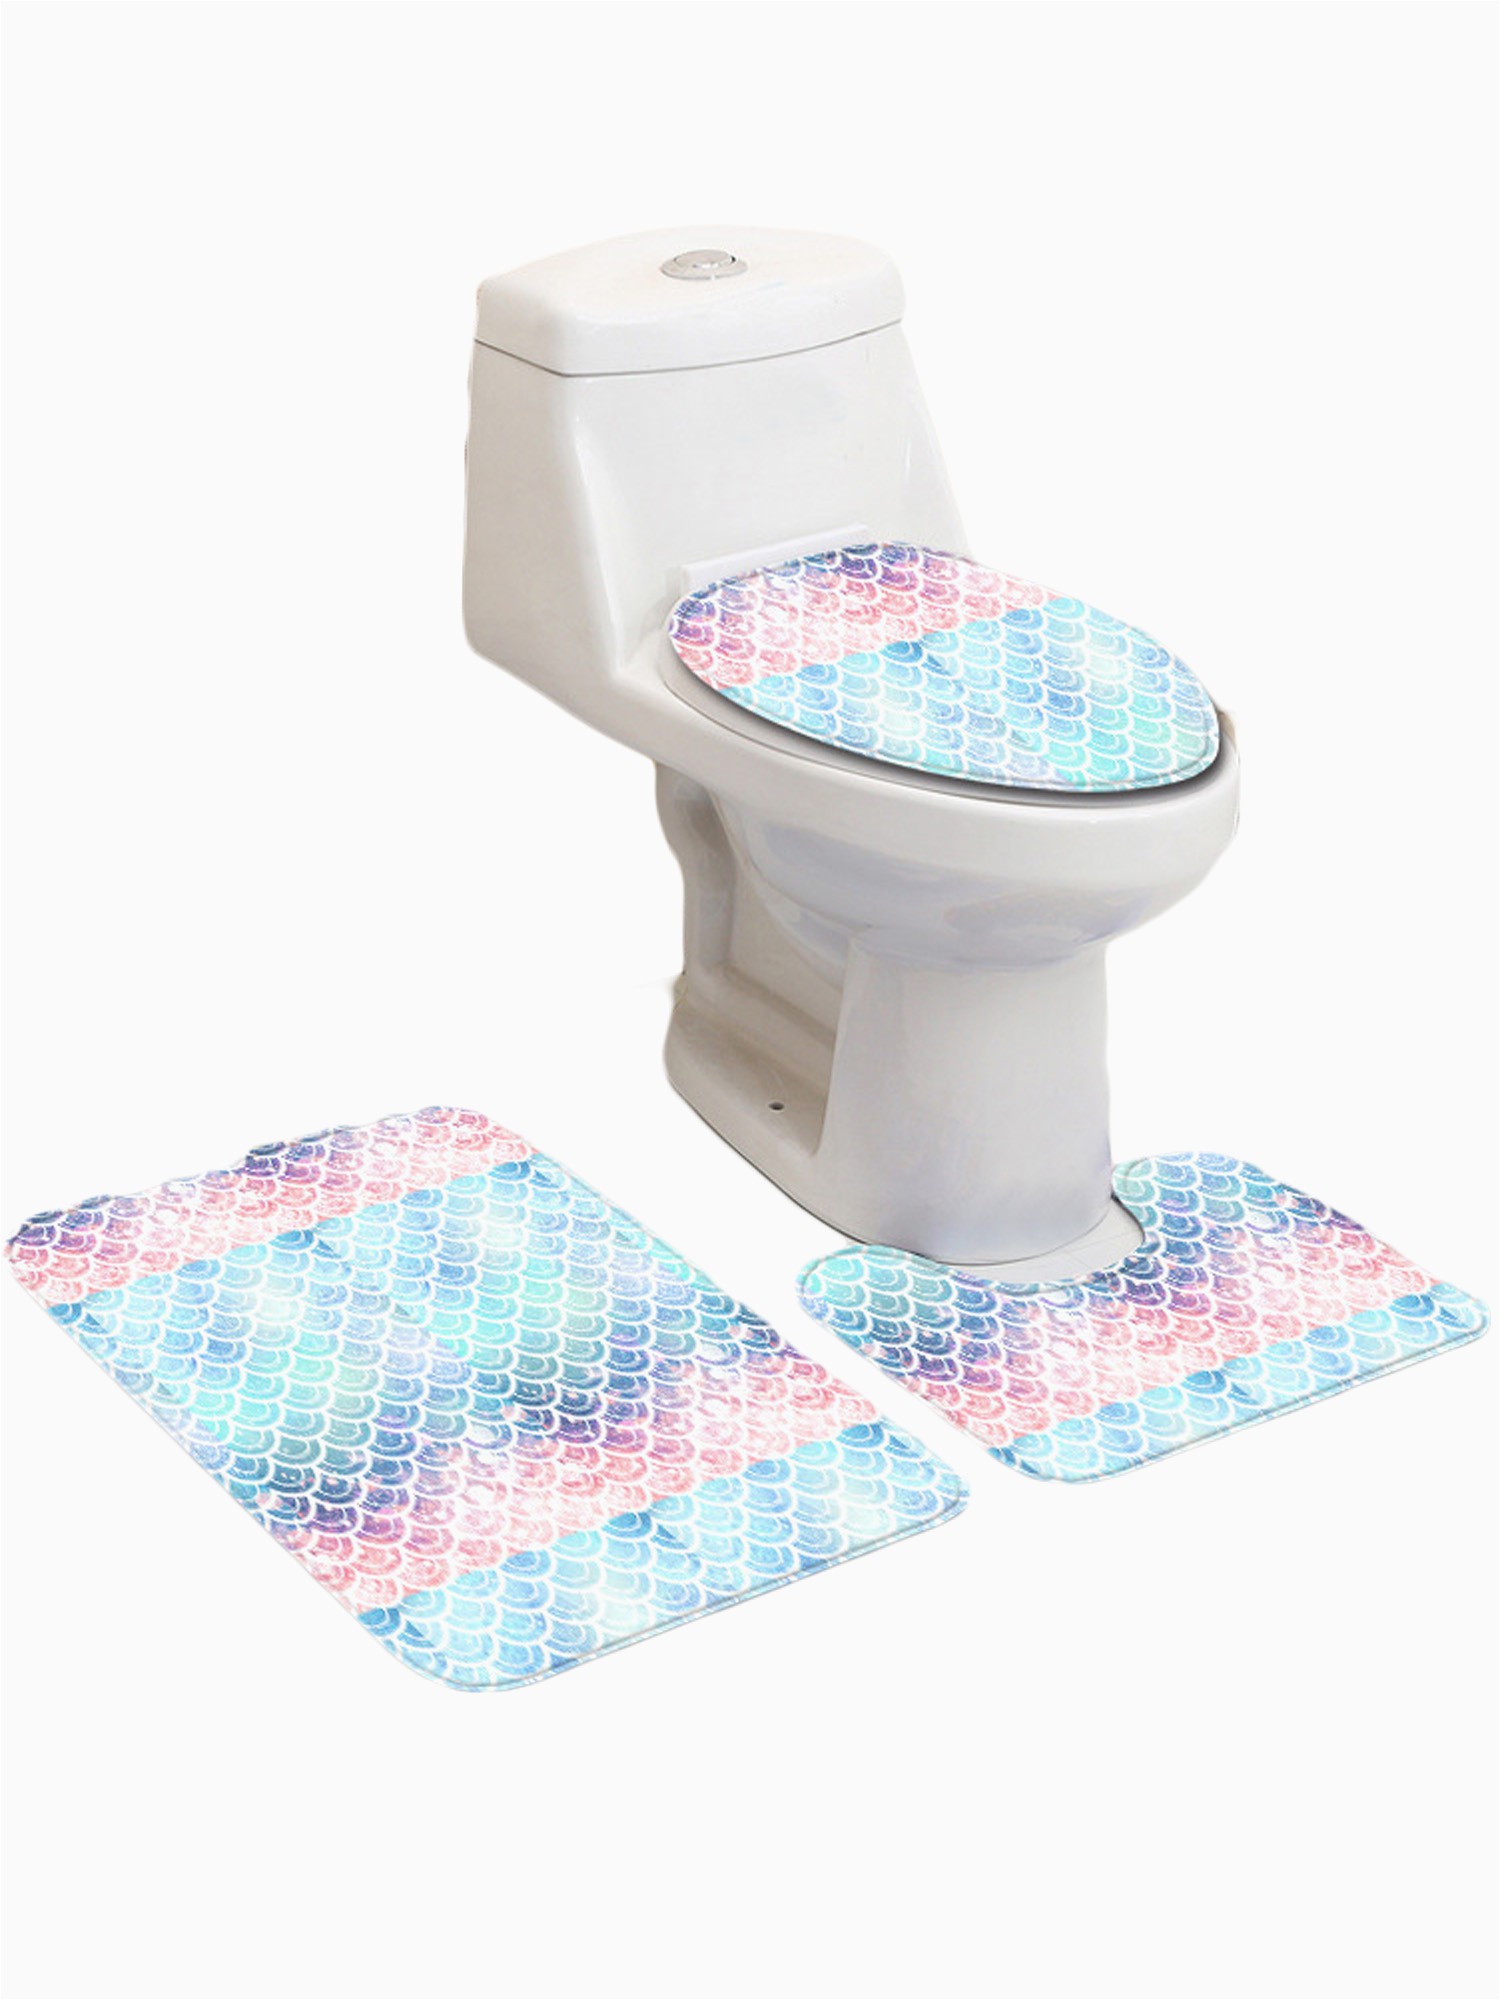 Bathroom Rugs and toilet Covers 3pcs Fish Scales Carpet Rug Set toilet Cover Non Slip Bathroom Bath Mat Walmart